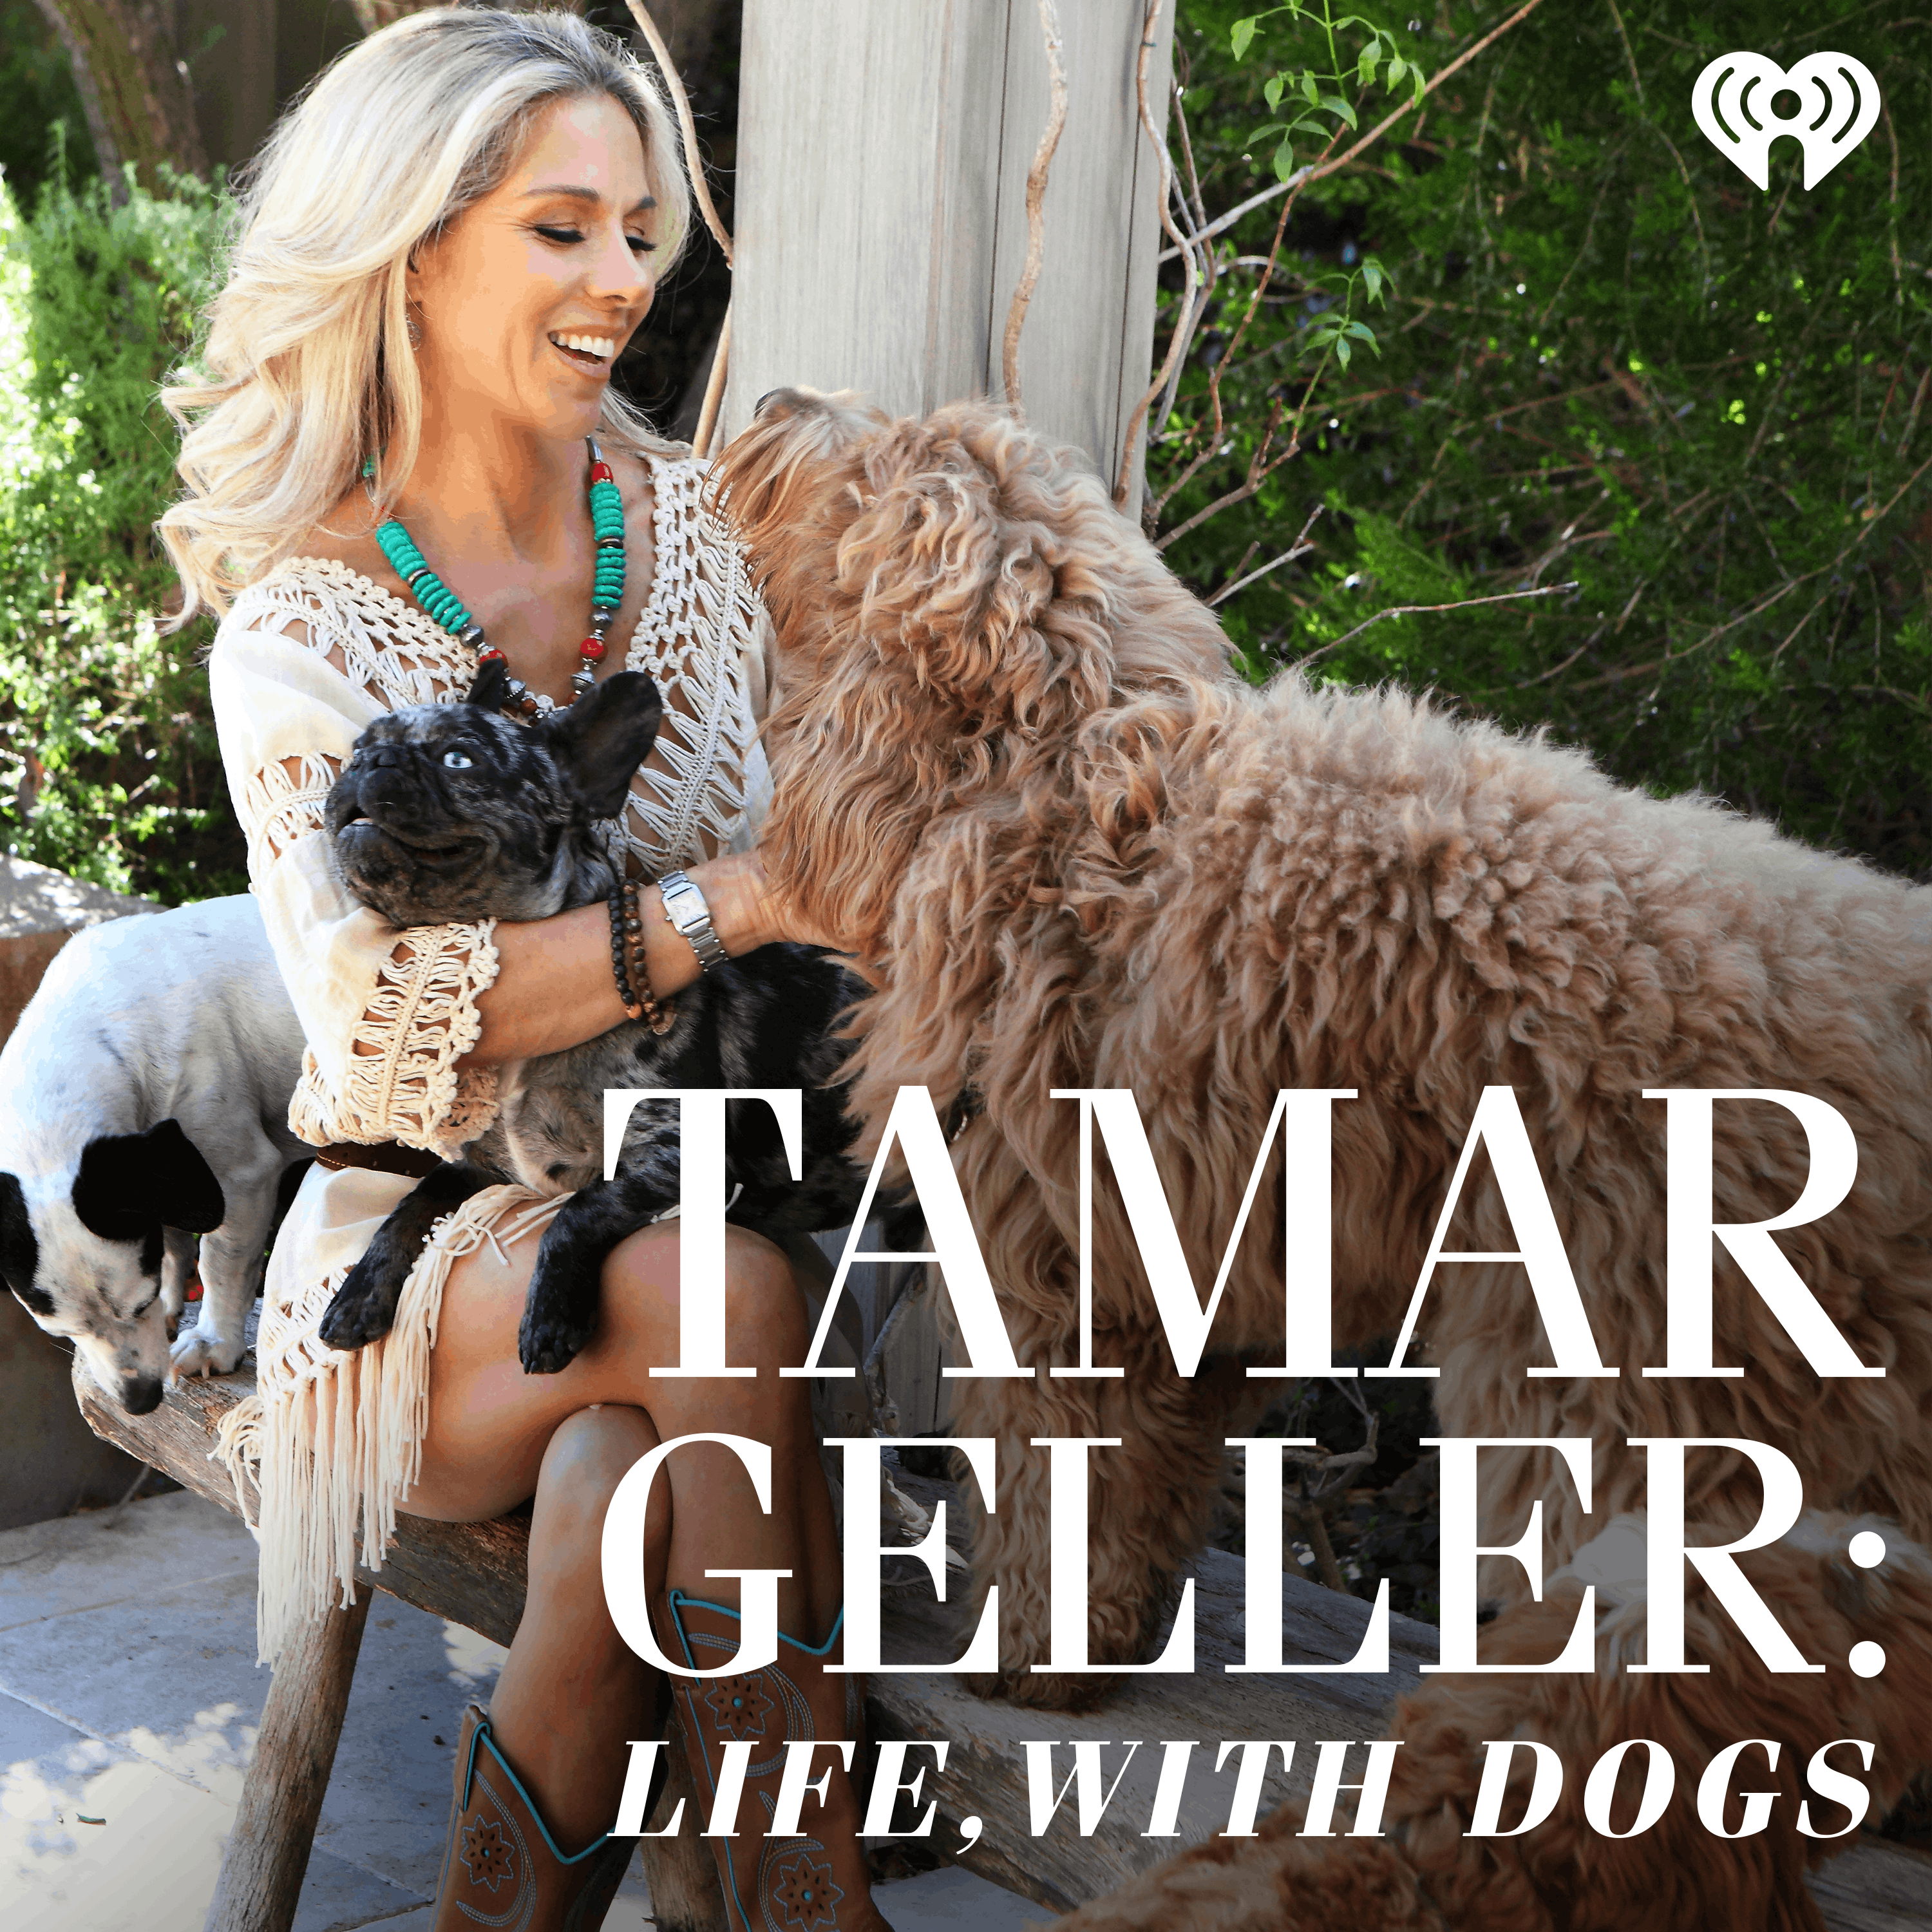 Tamar Geller: Life, with Dogs